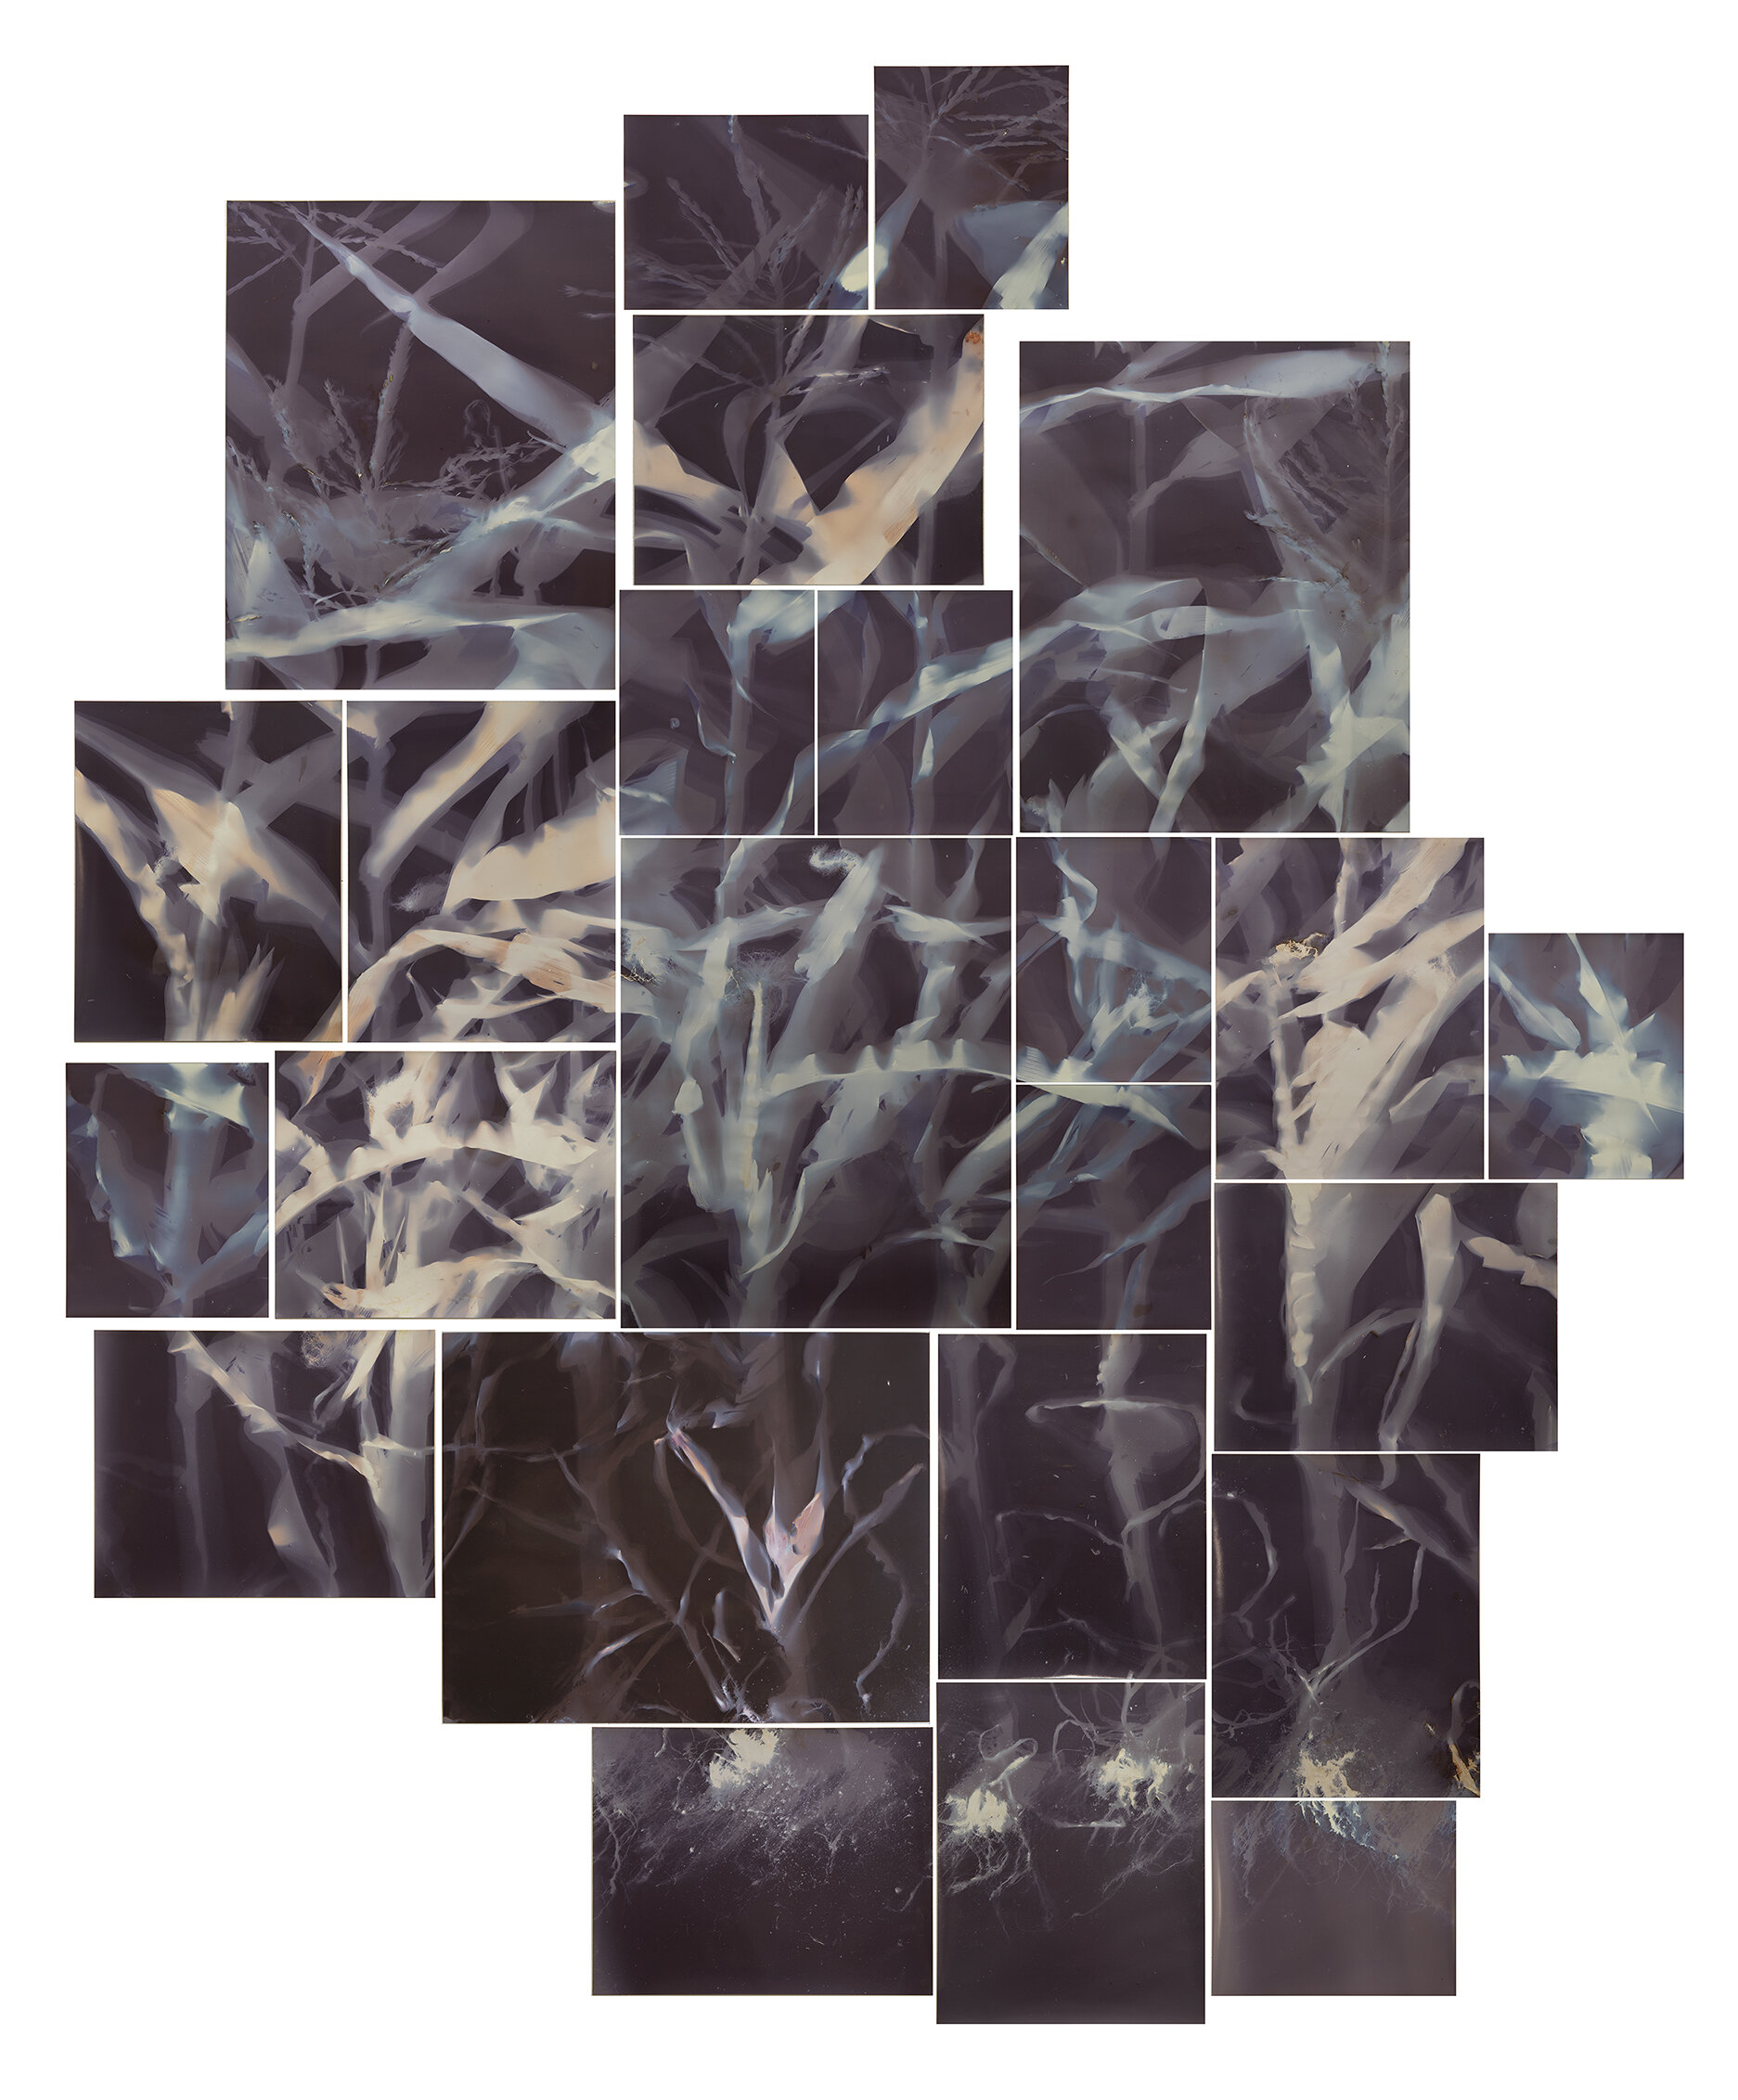  cornfield #3 2019  65” x 79”  lumen prints 